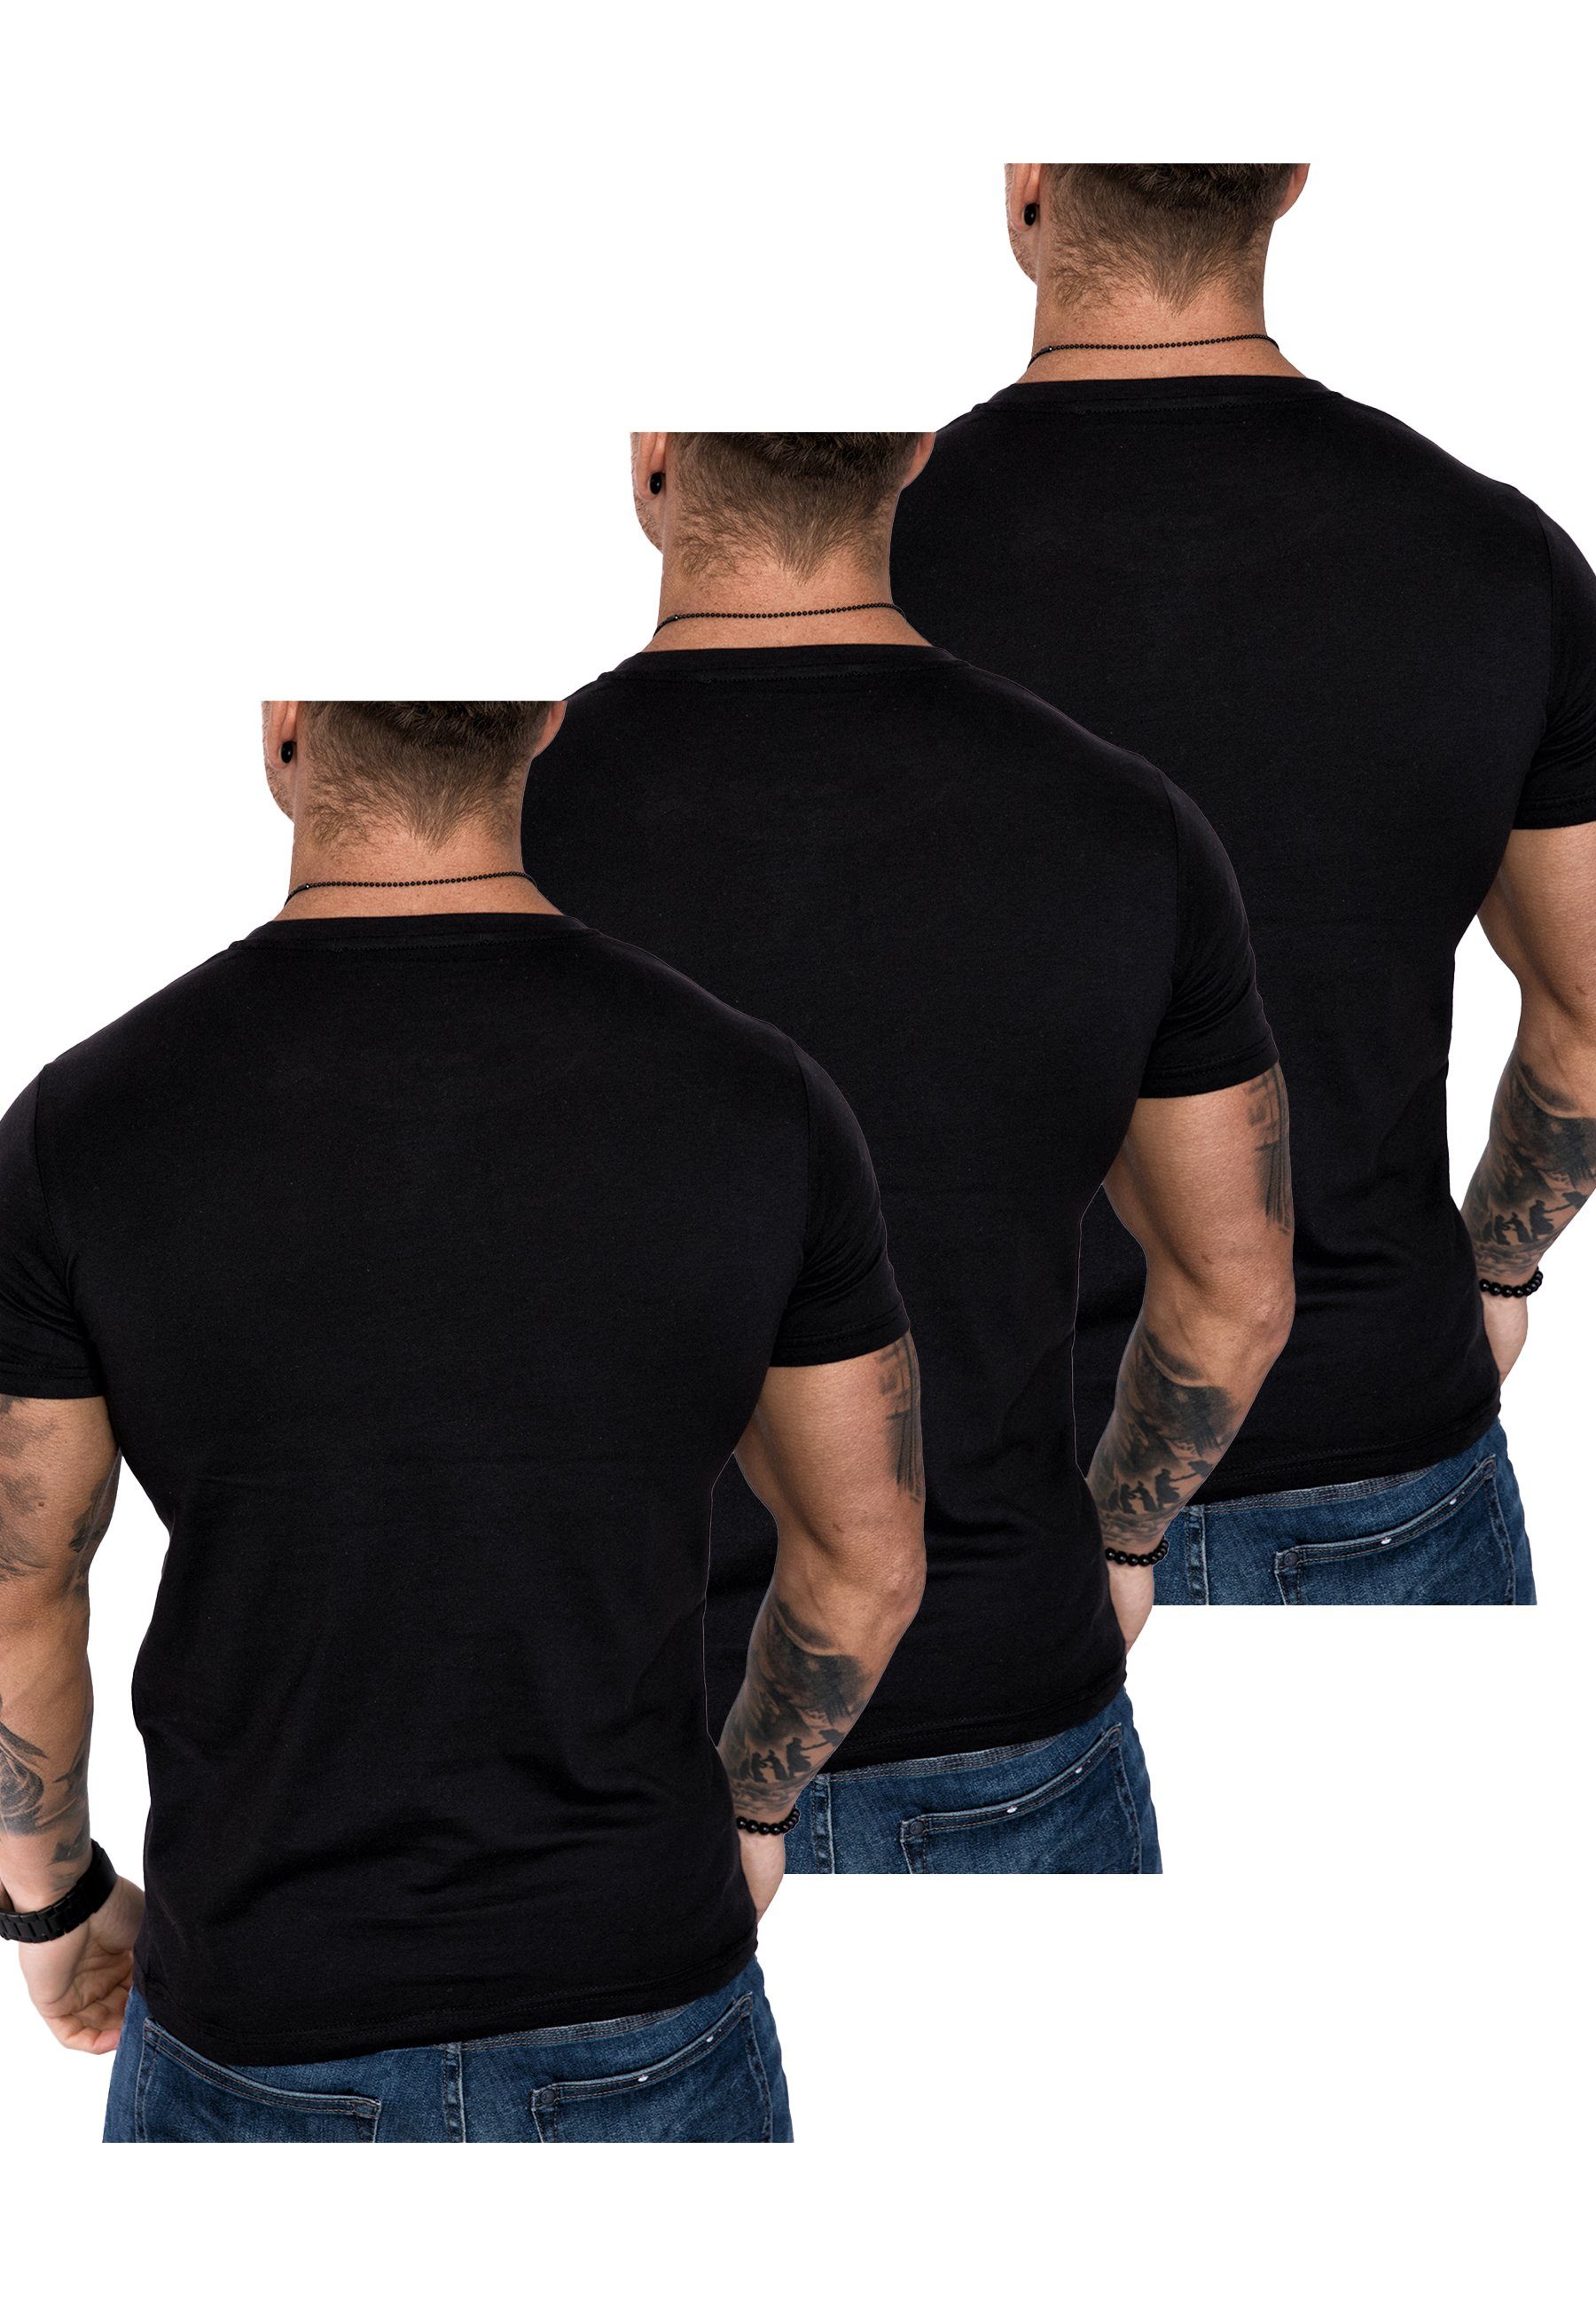 LANCASTER Herren T-Shirts mit 3er-Pack (3er-Pack) Amaci&Sons Rundhalsausschnitt (3x Oversize Schwarz) T-Shirt Basic 3. T-Shirt